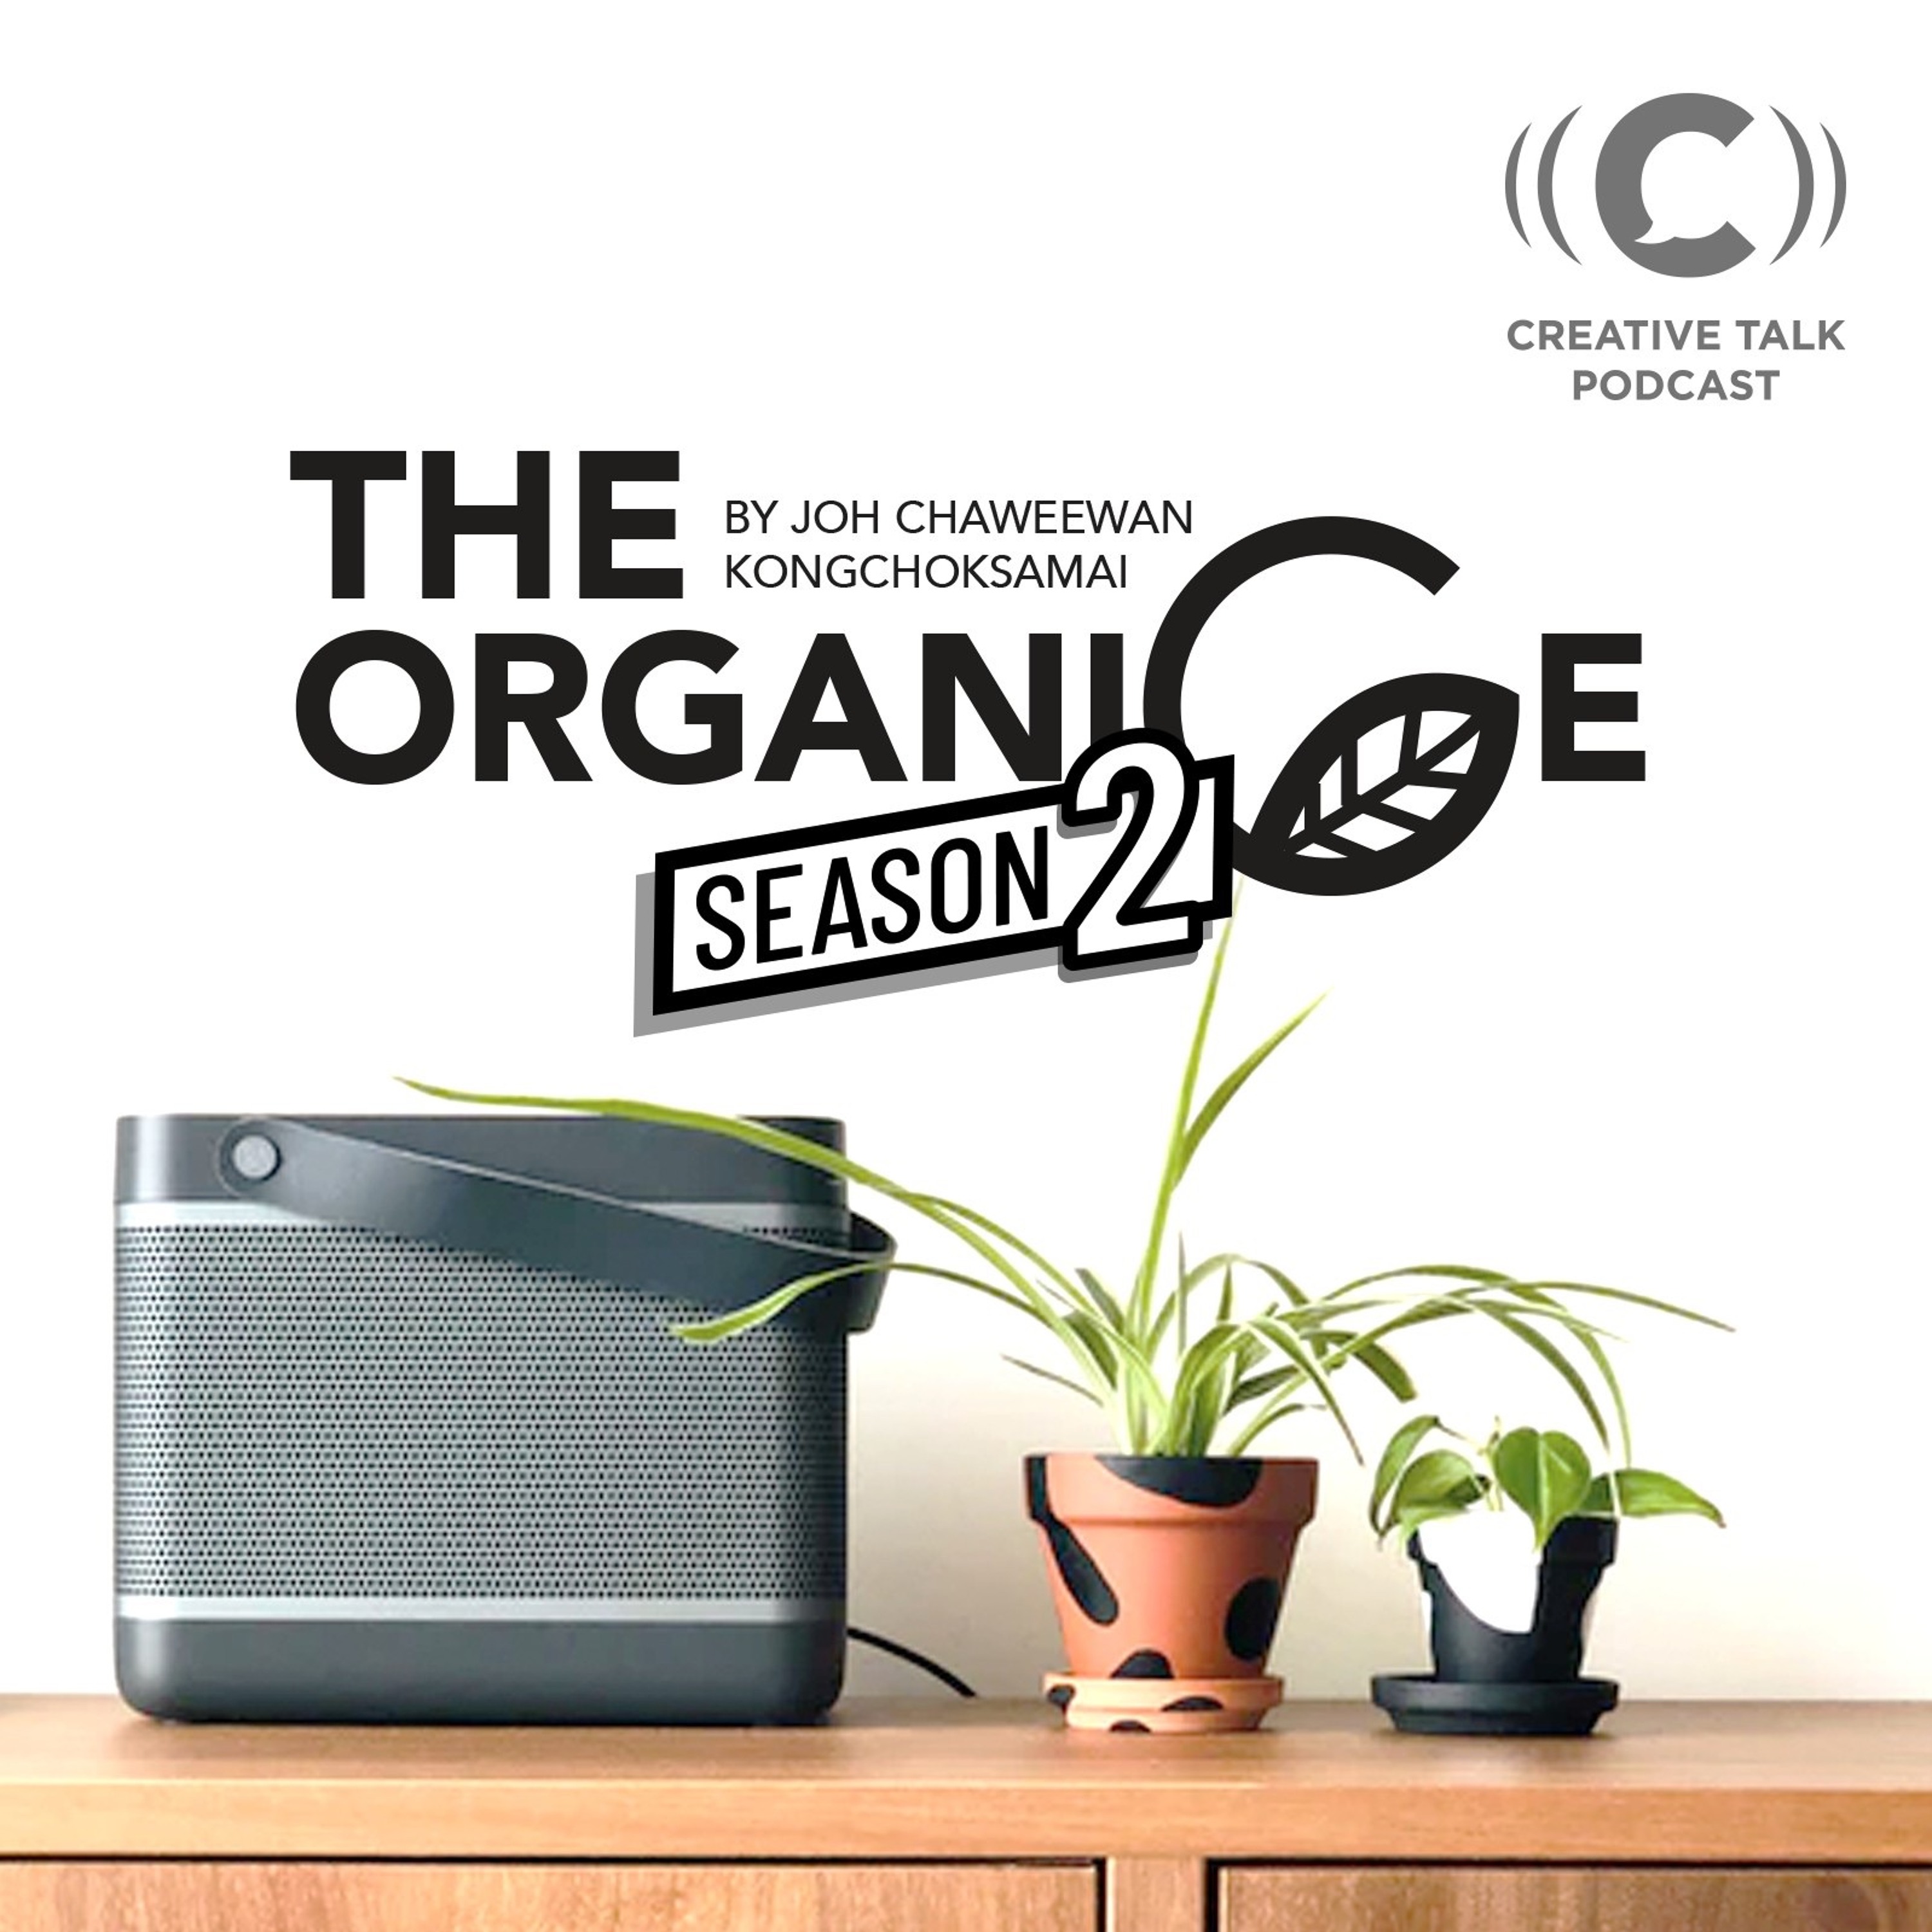 Organice262 แนะนำกิจกรรมเพิ่มพลังยามเช้าตรู่